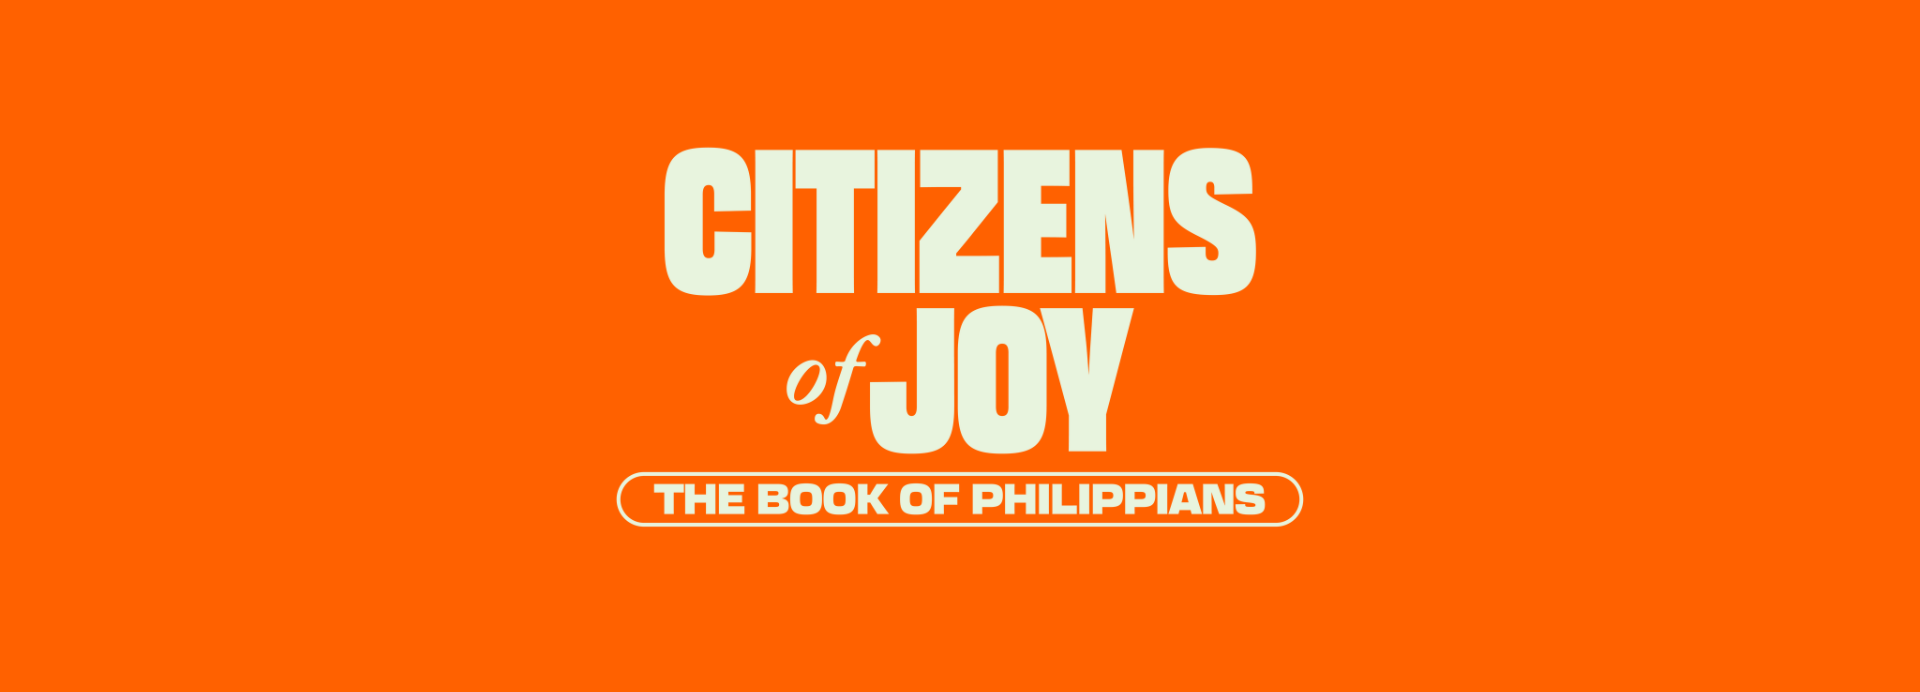 Citizens of Joy